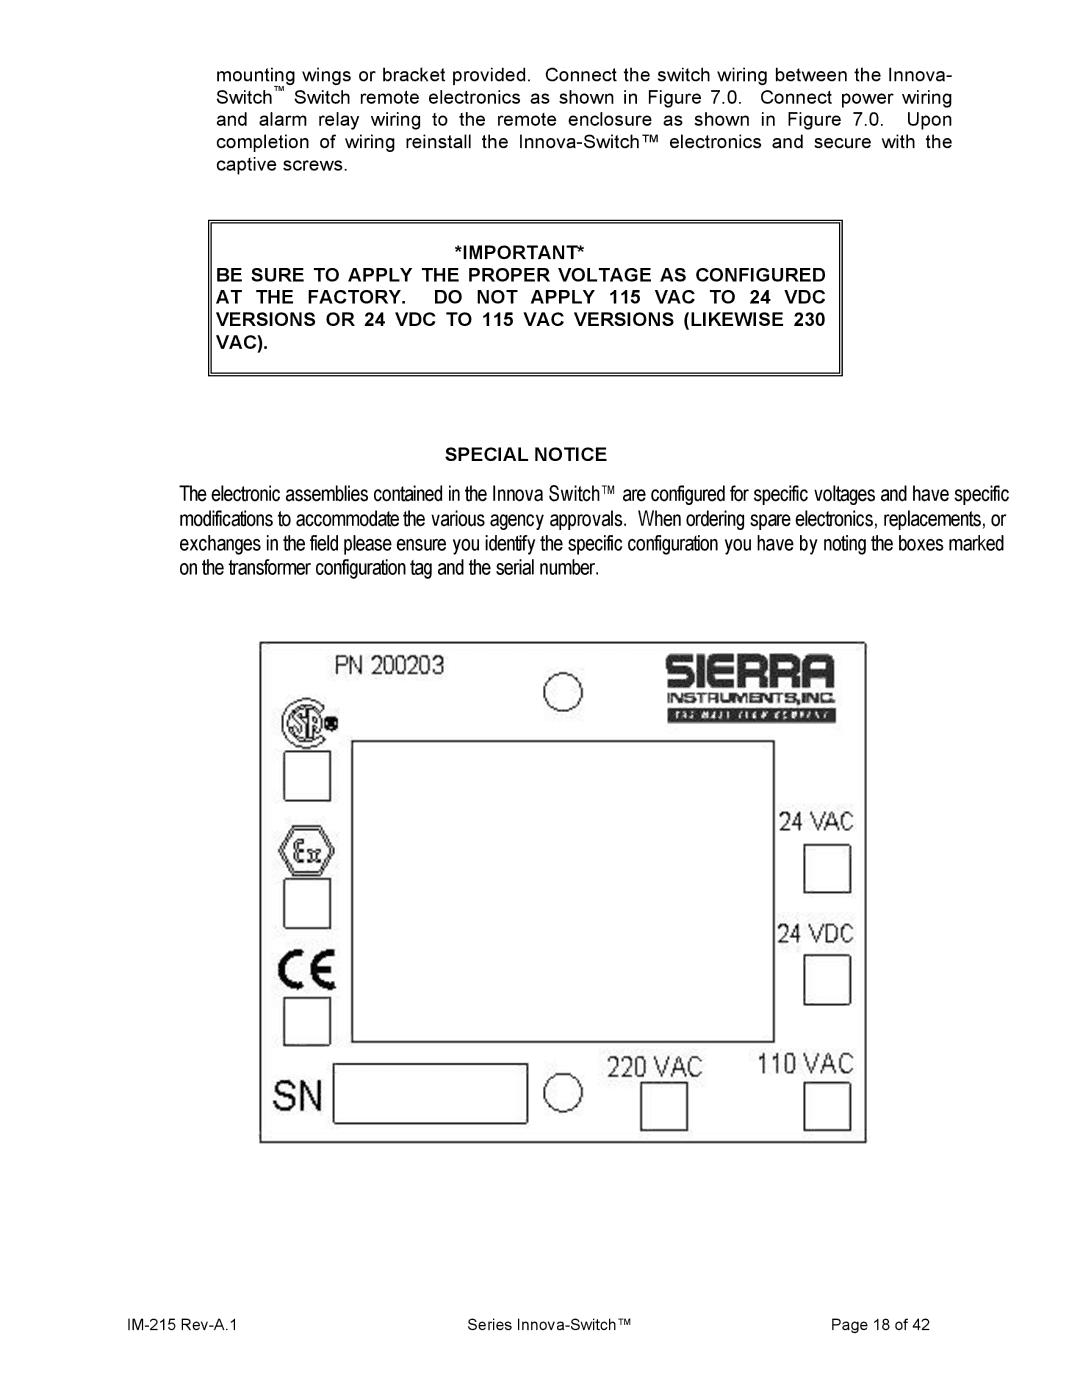 Sierra manual IM-215 Rev-A.1 Series Innova-Switch 